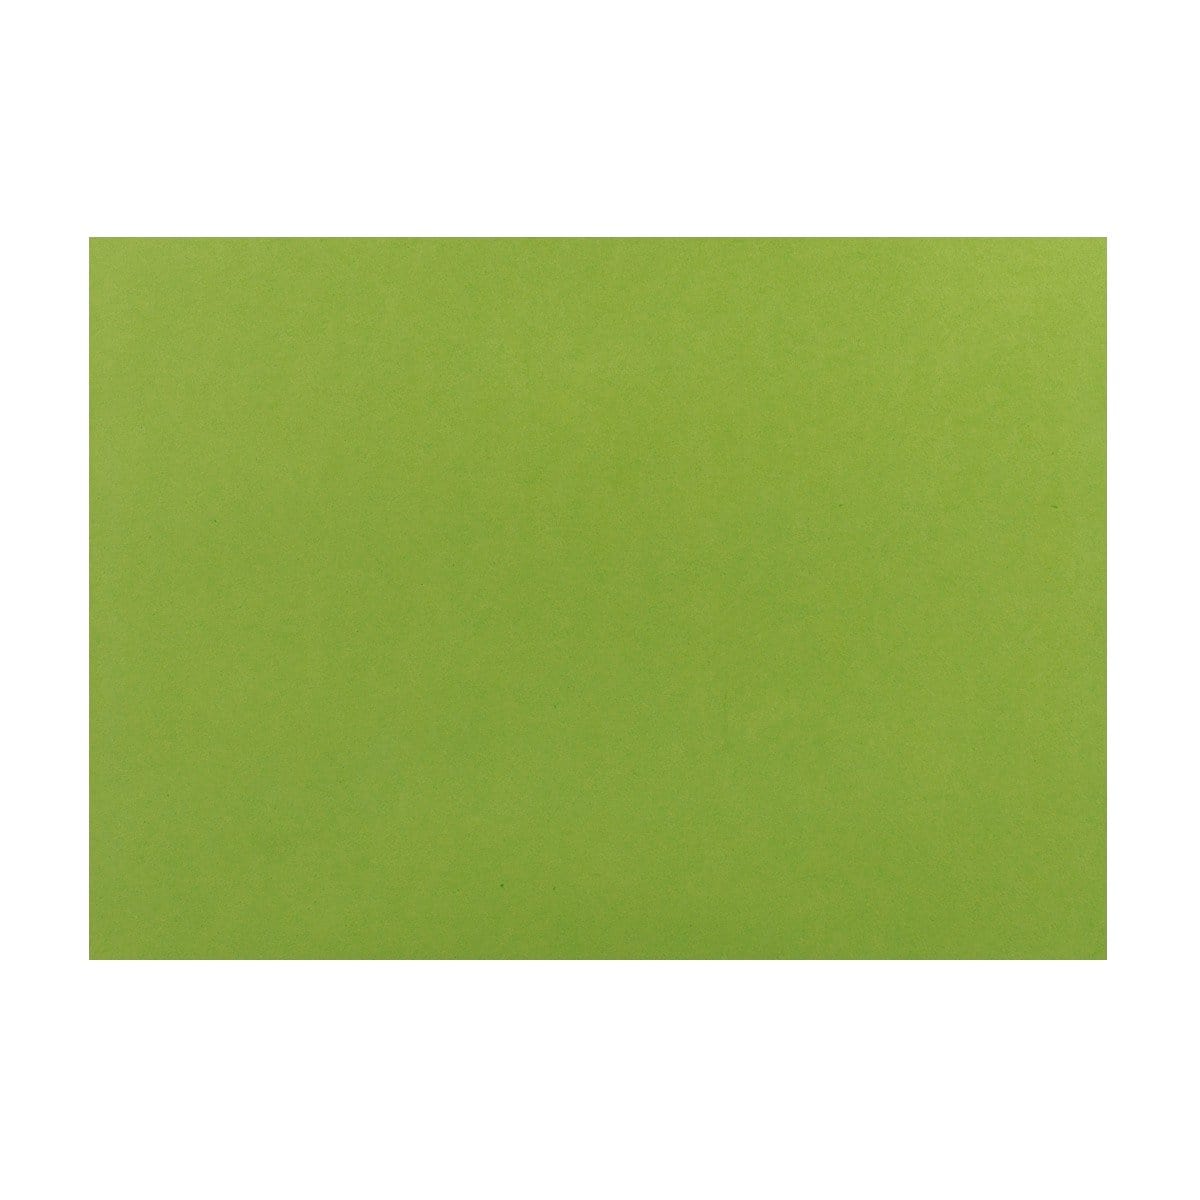 products/c5-green-vflap-envelopesb.jpg